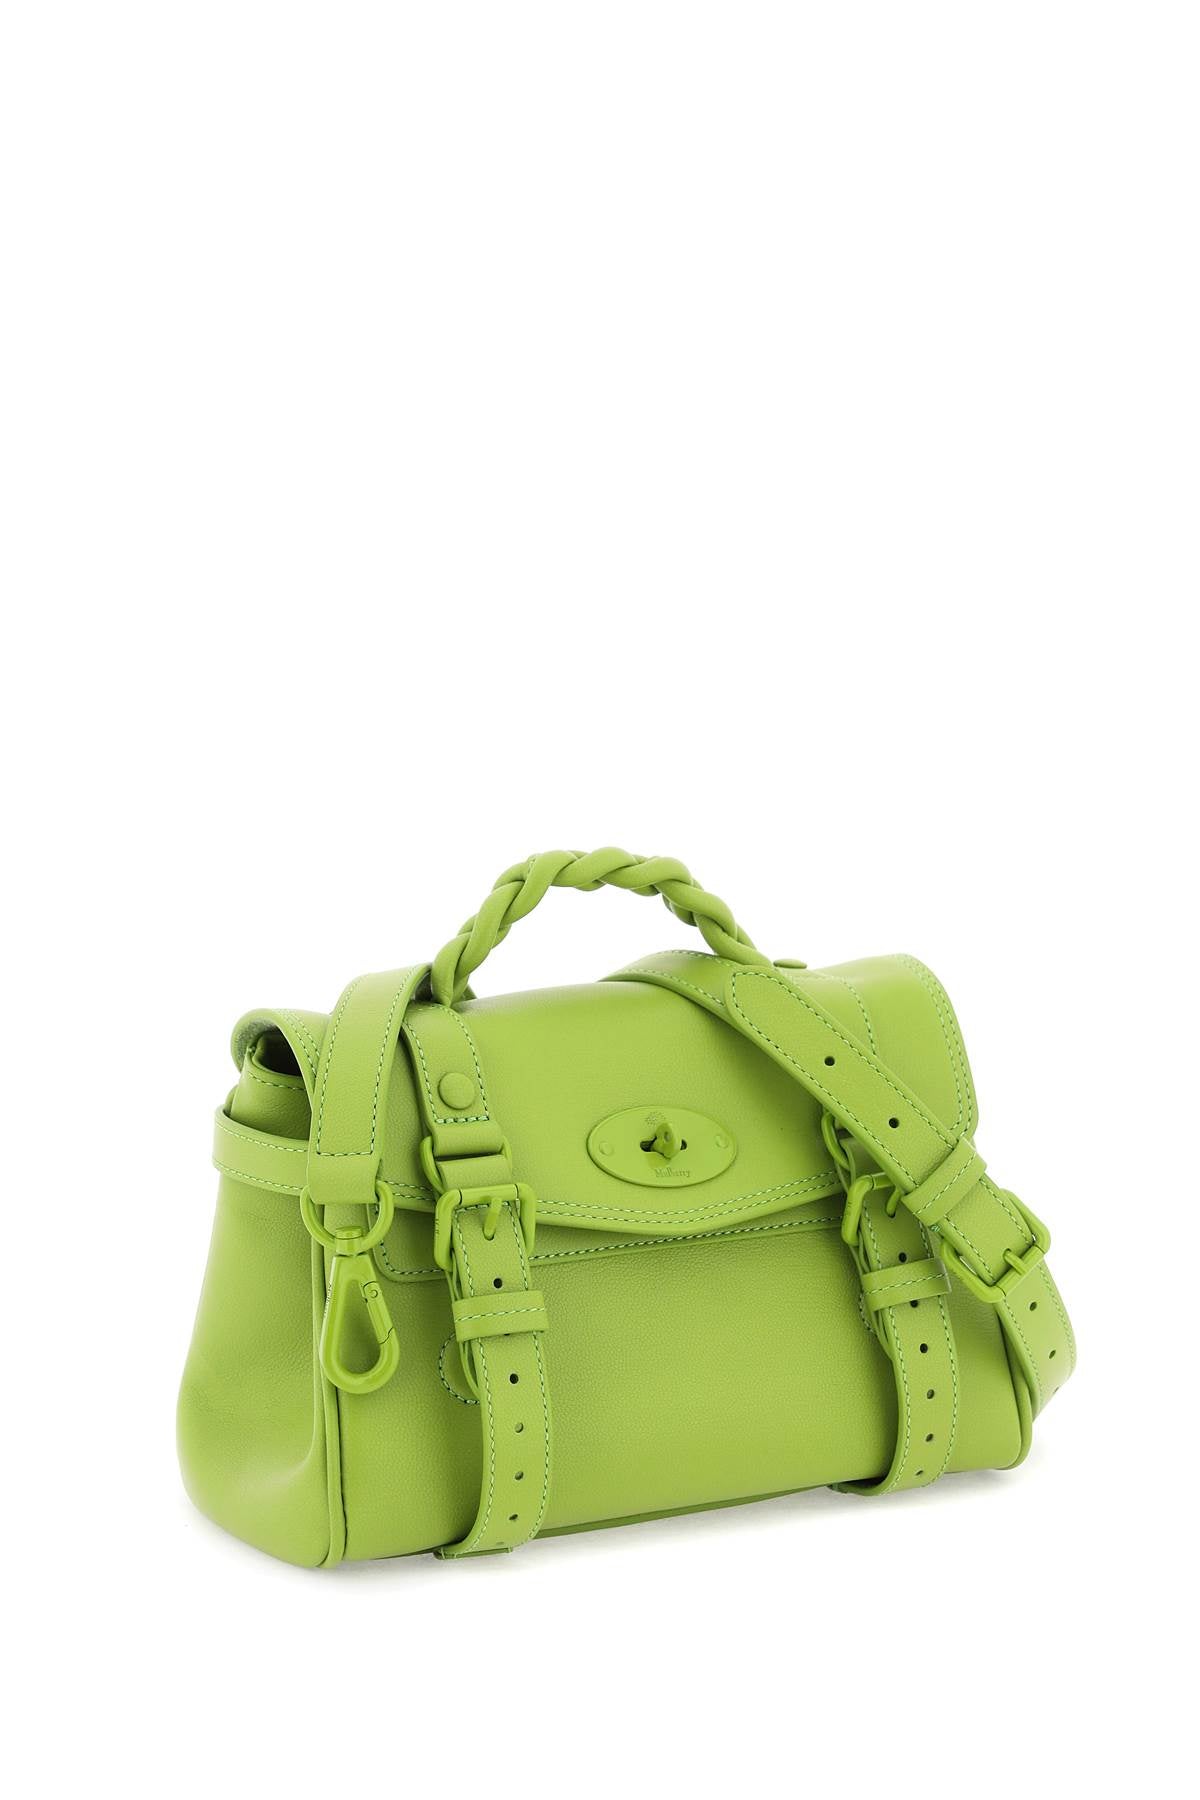 Shop Mulberry Green Leather Mini Handbag With Iconic Postman's Lock Closure